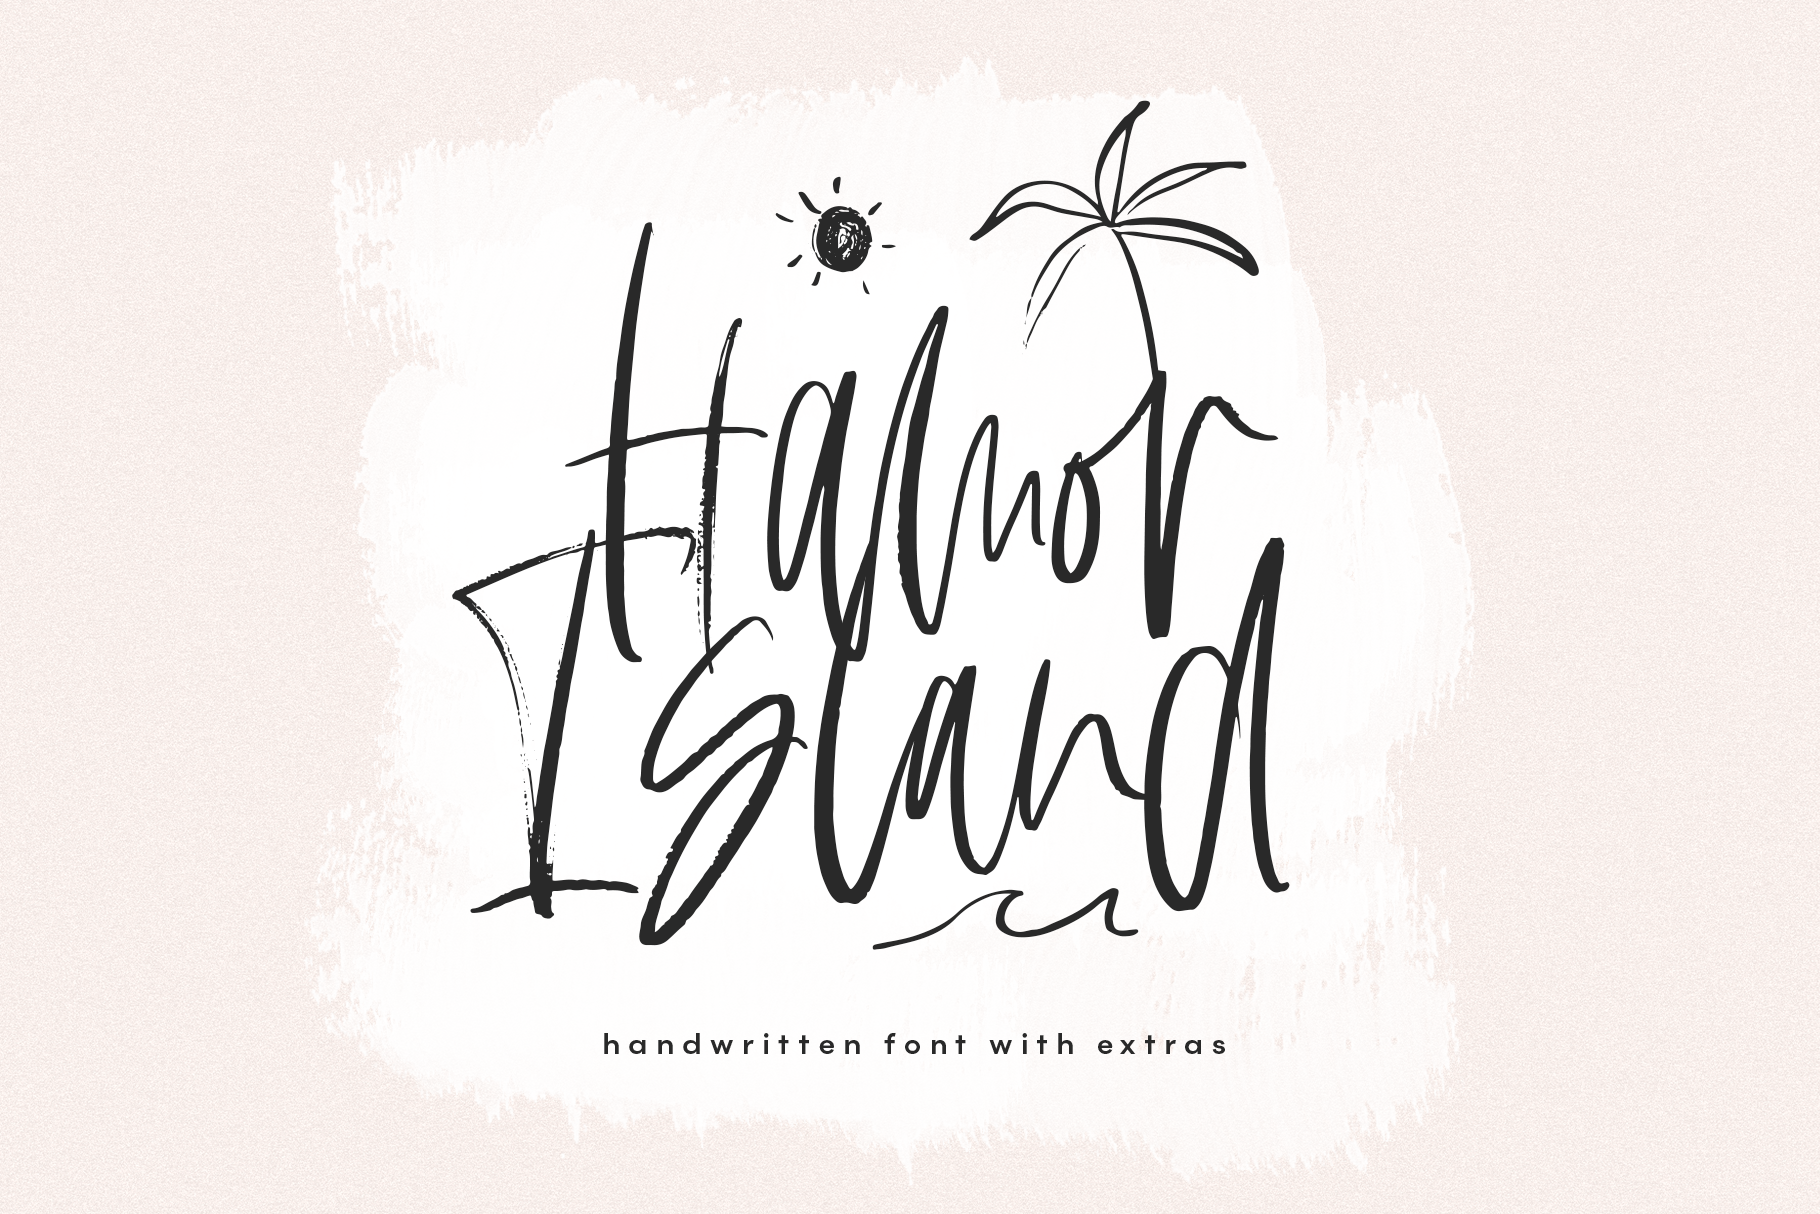 Hamor Island Handwritten Script Font With Extras By Ka Designs Thehungryjpeg Com